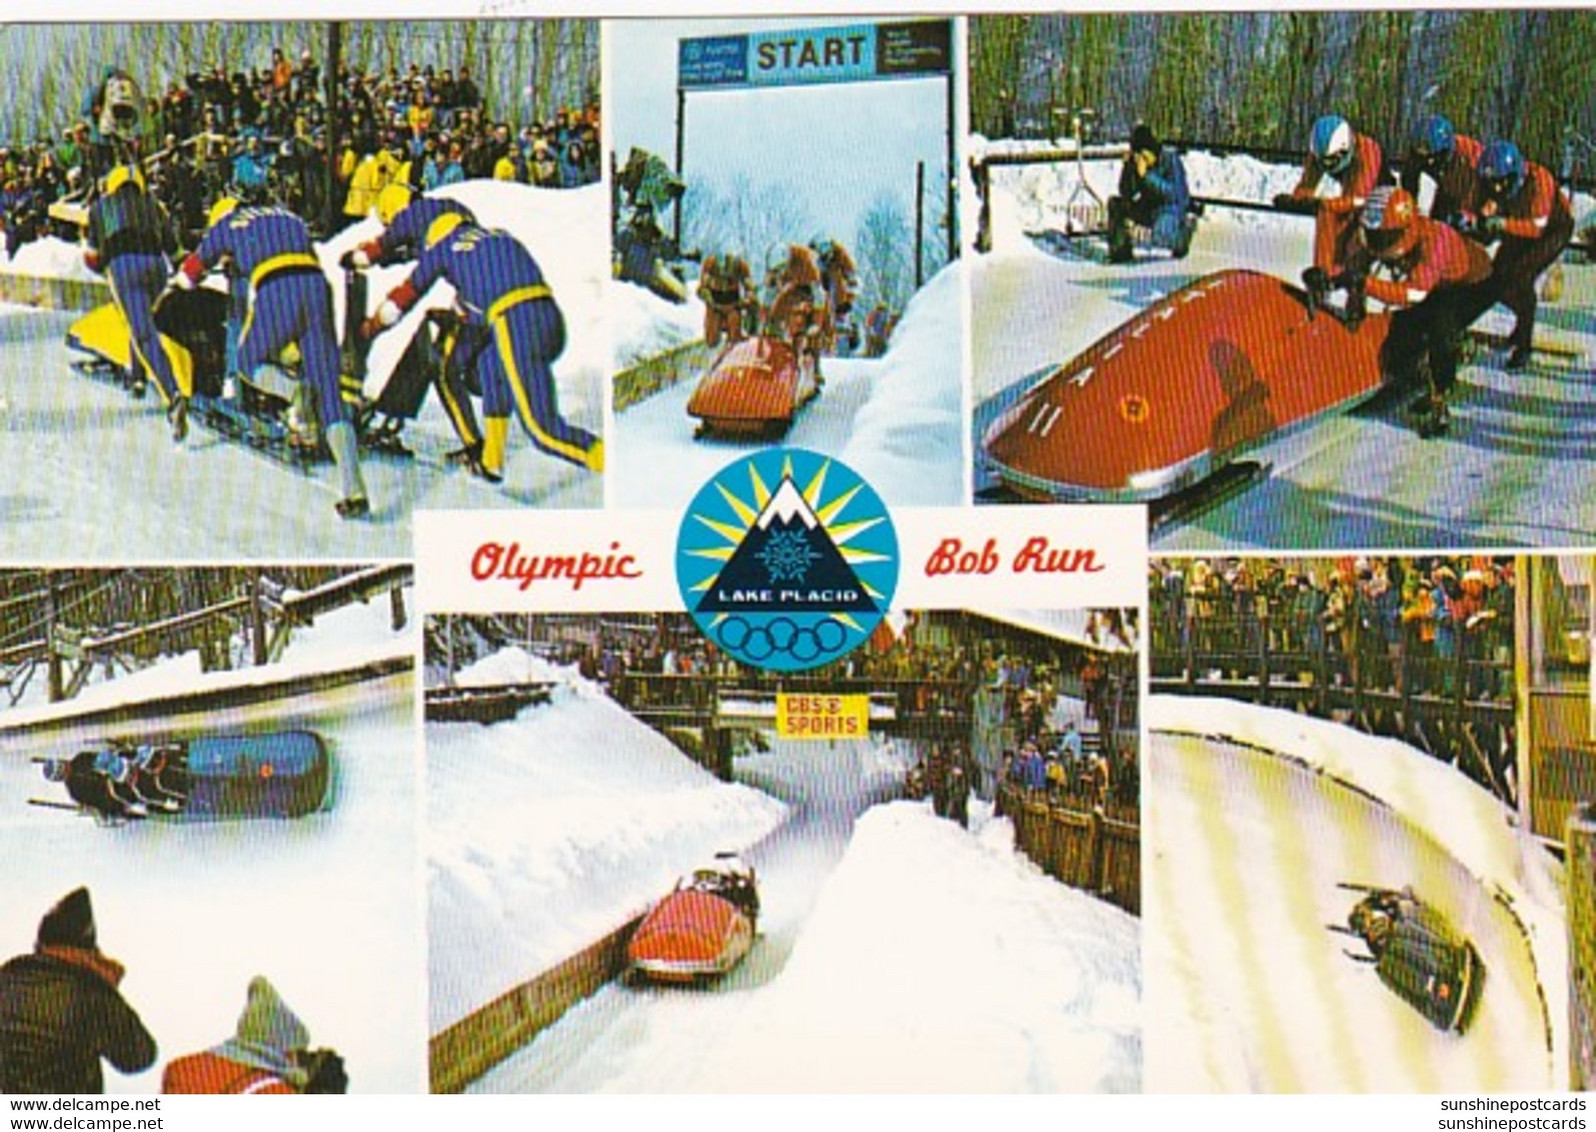 Ne York Lake Placid Olympic Bobrun Mount Van Hoevenberg - Adirondack